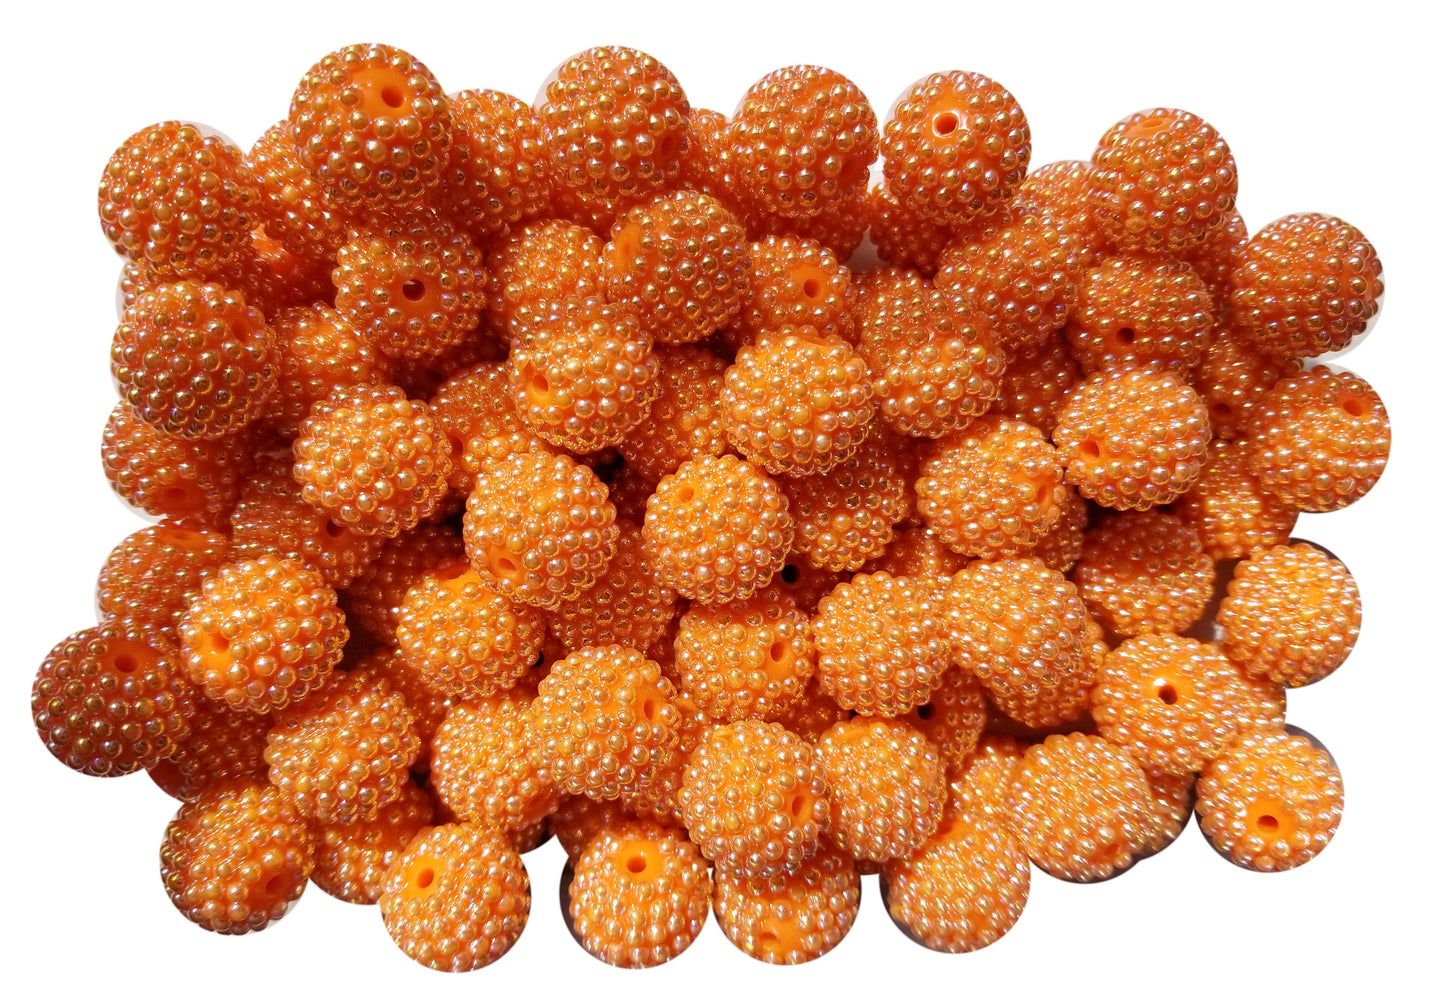 orange berry 20mm bubblegum beads